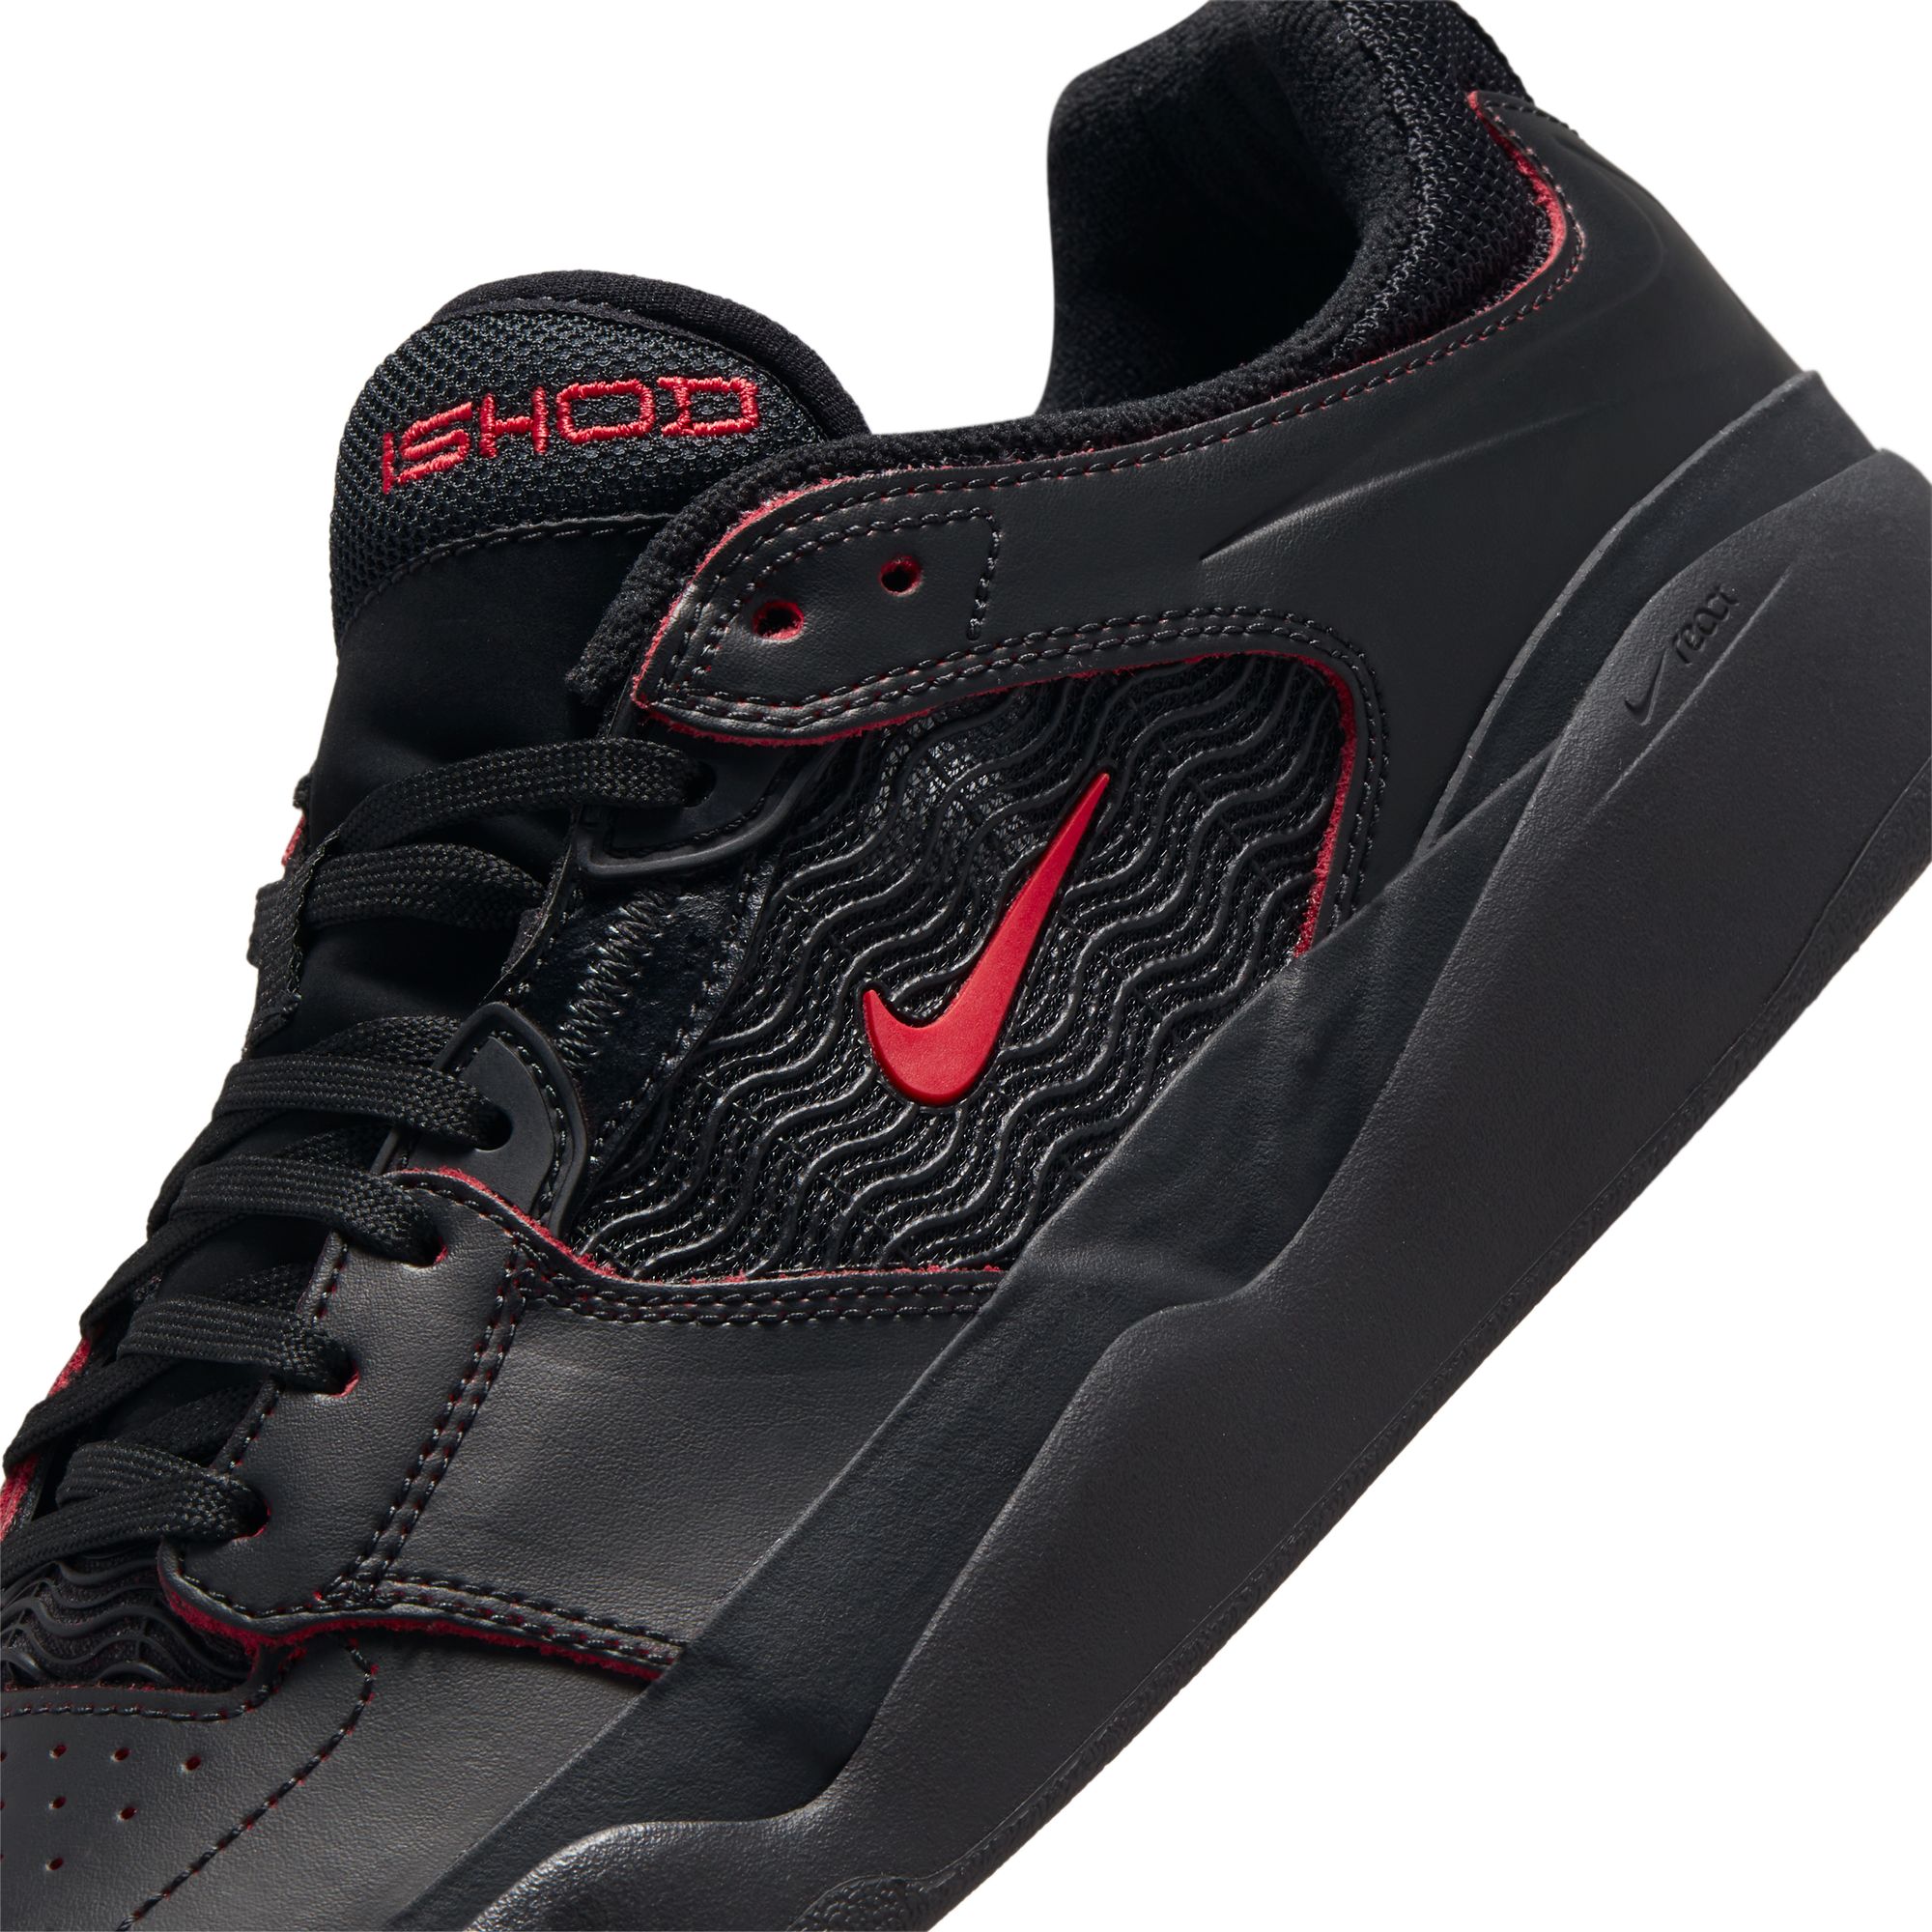 Nike SB Ishod Wair Black/University Red